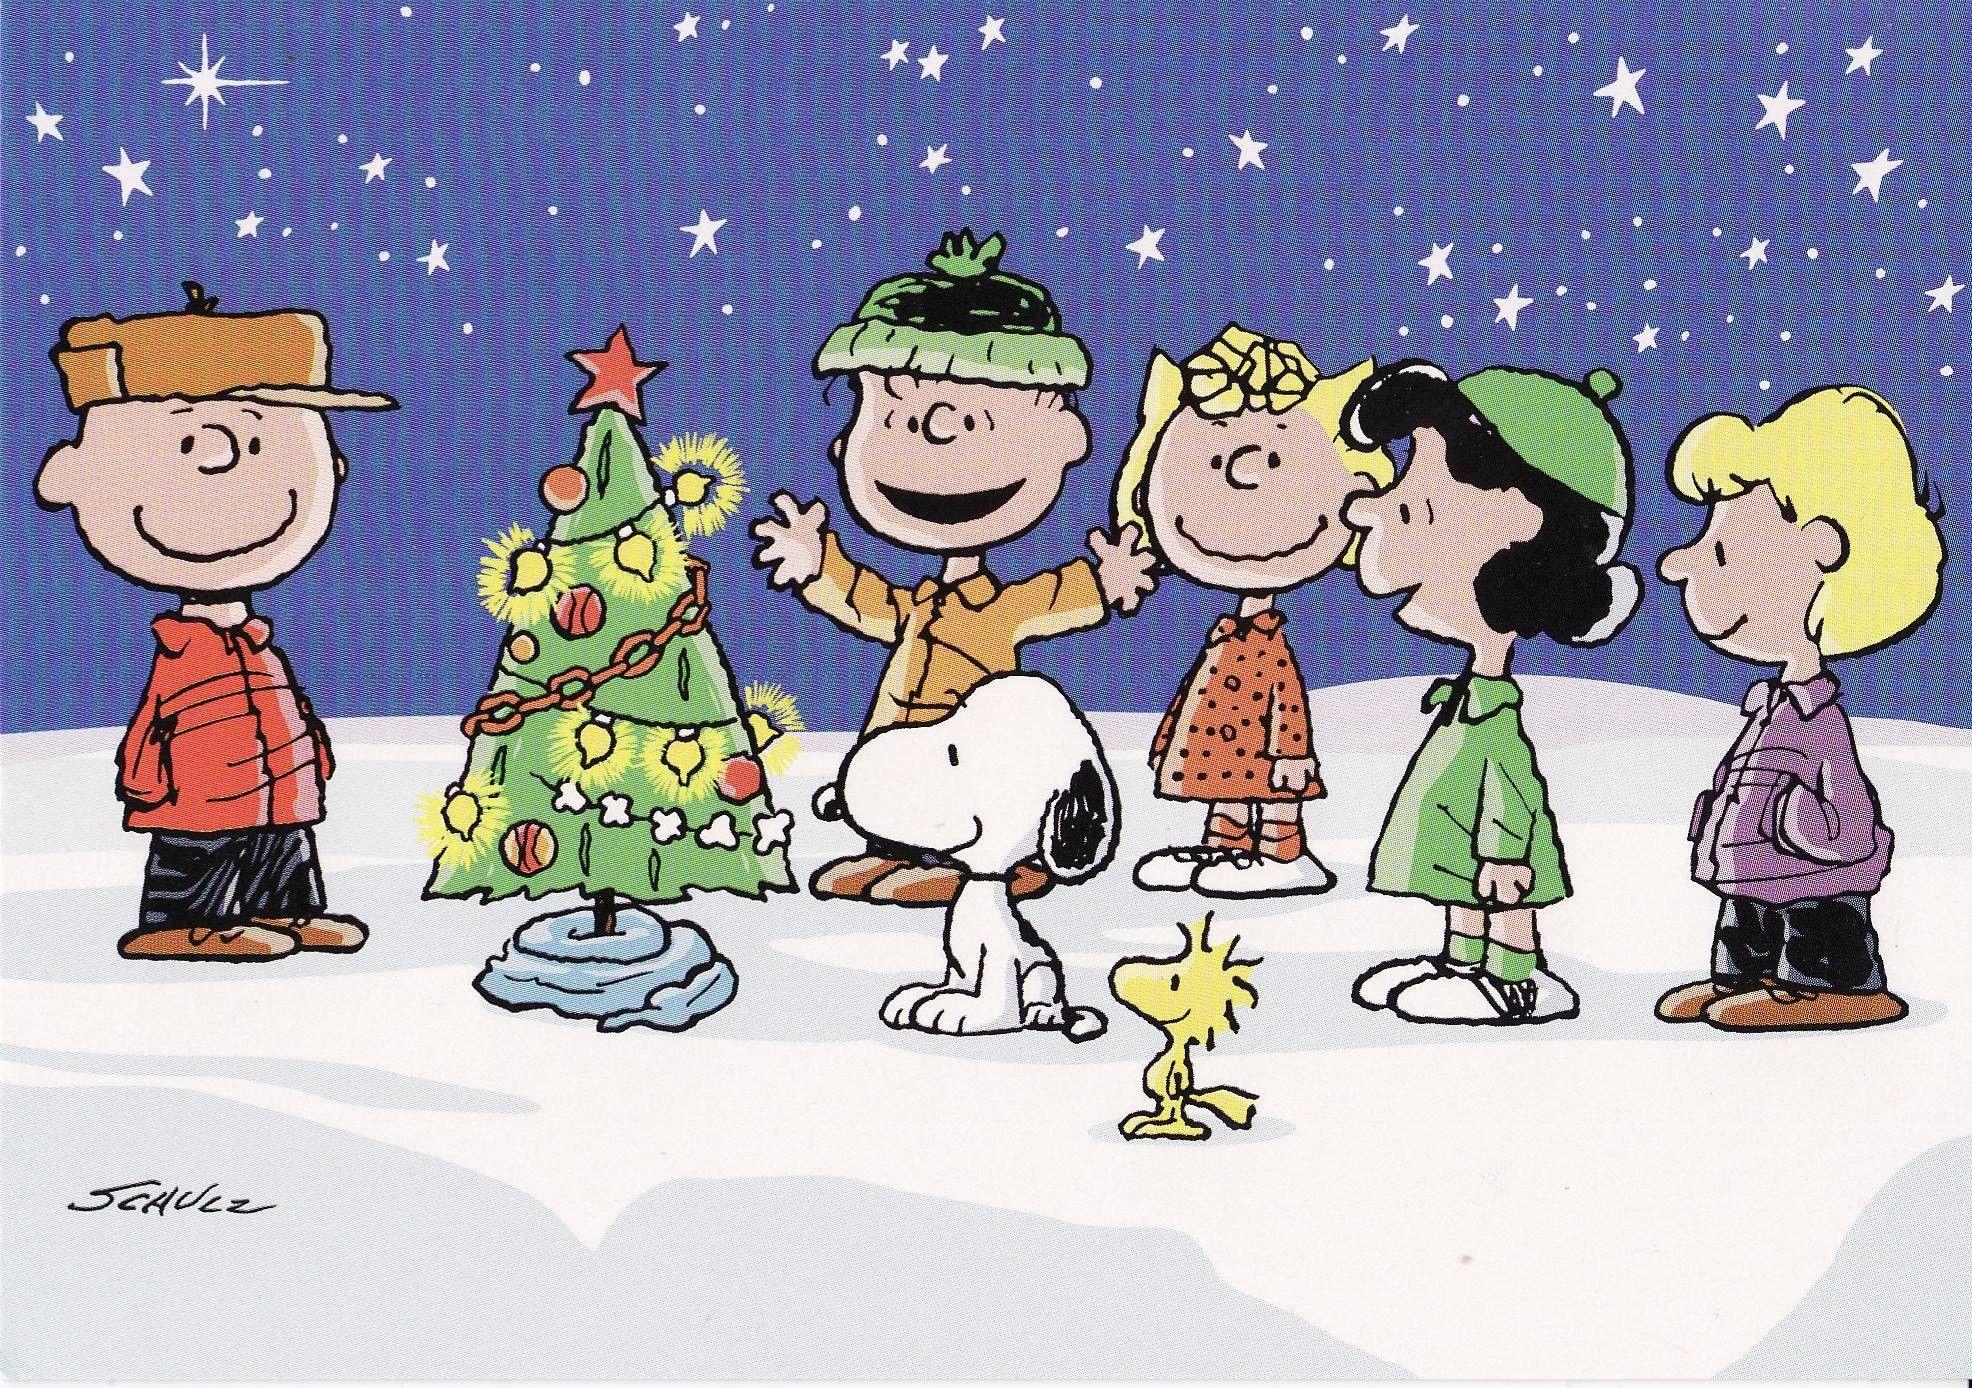 Charlie Brown Christmas wallpaperDownload free beautiful